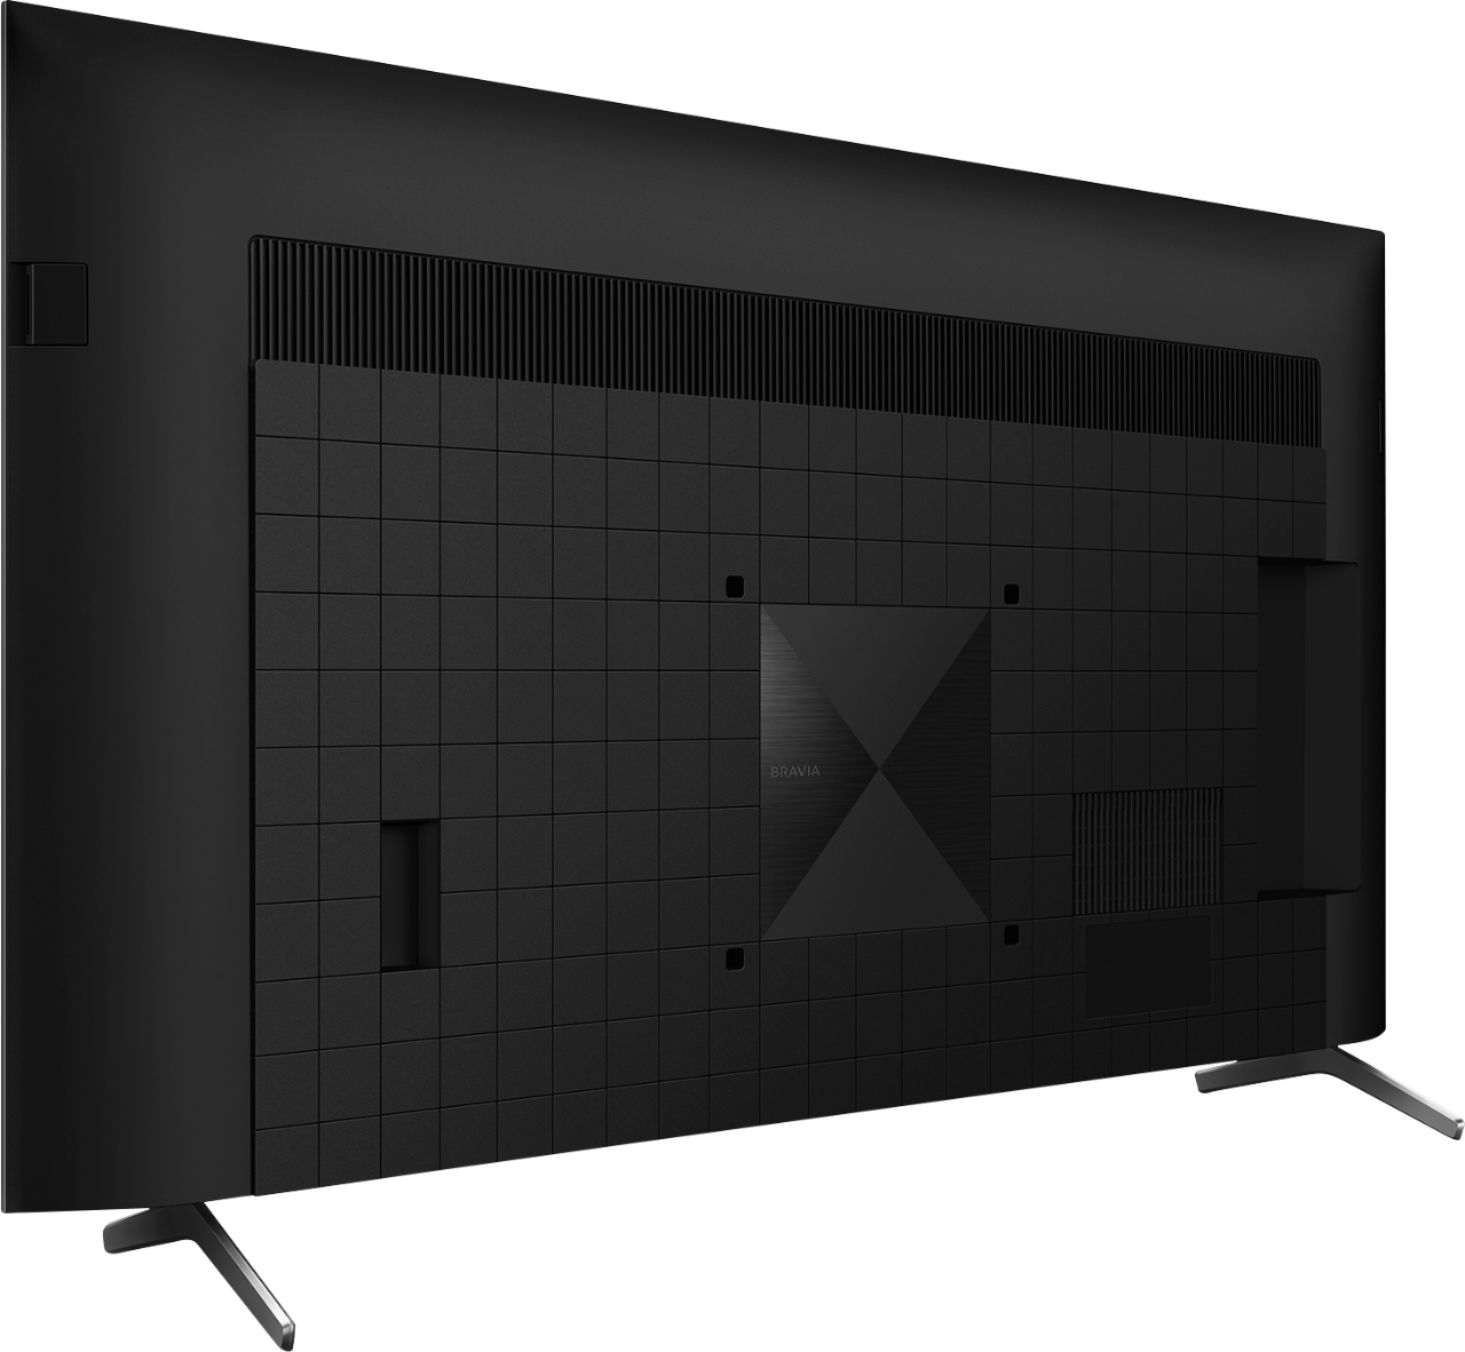 Angle View: TCL - 65” Class 4 Series 4K UHD Smart Roku TV